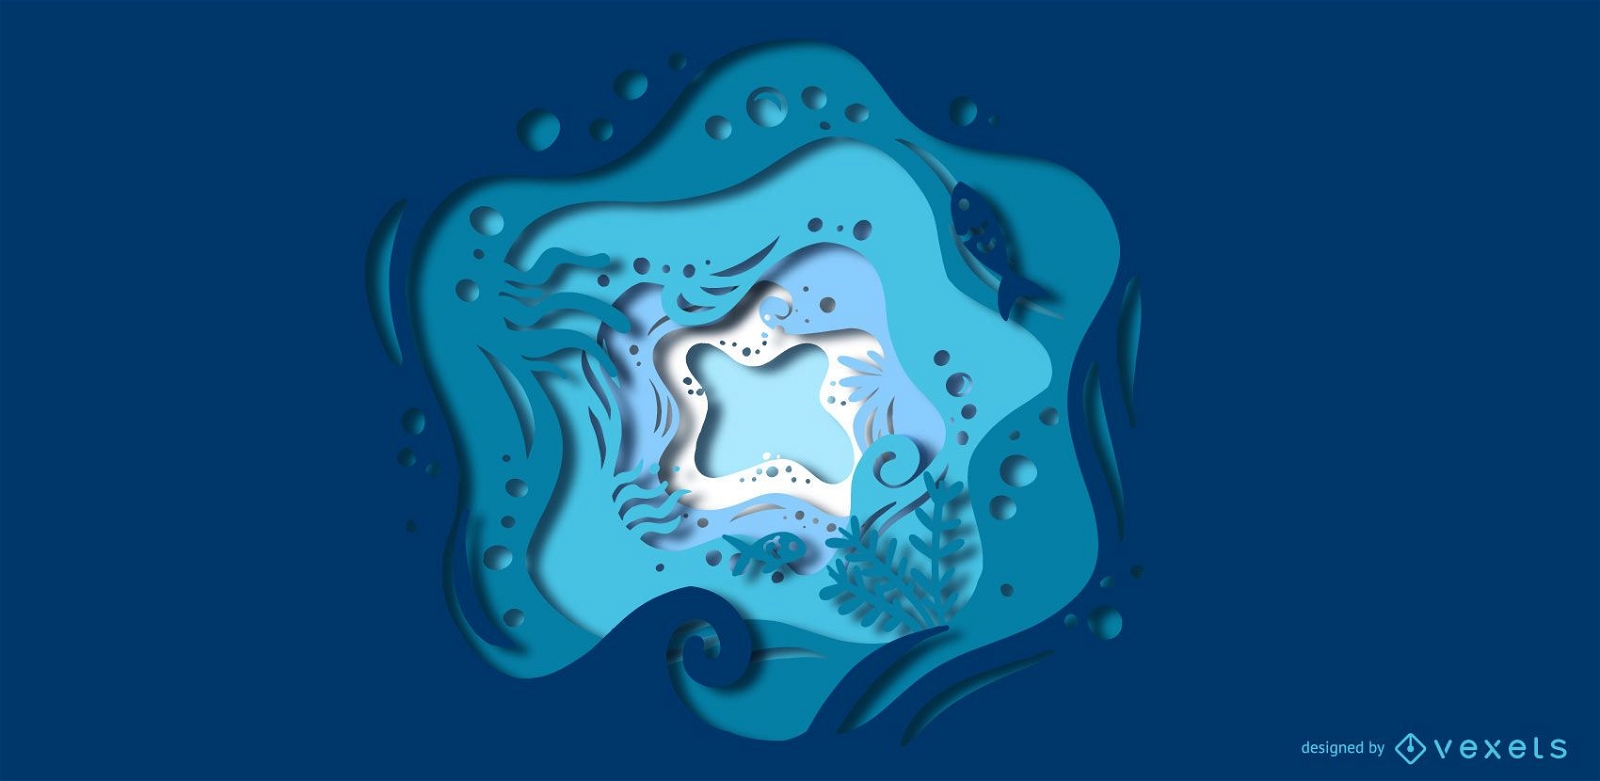 Underwater papercut illustration